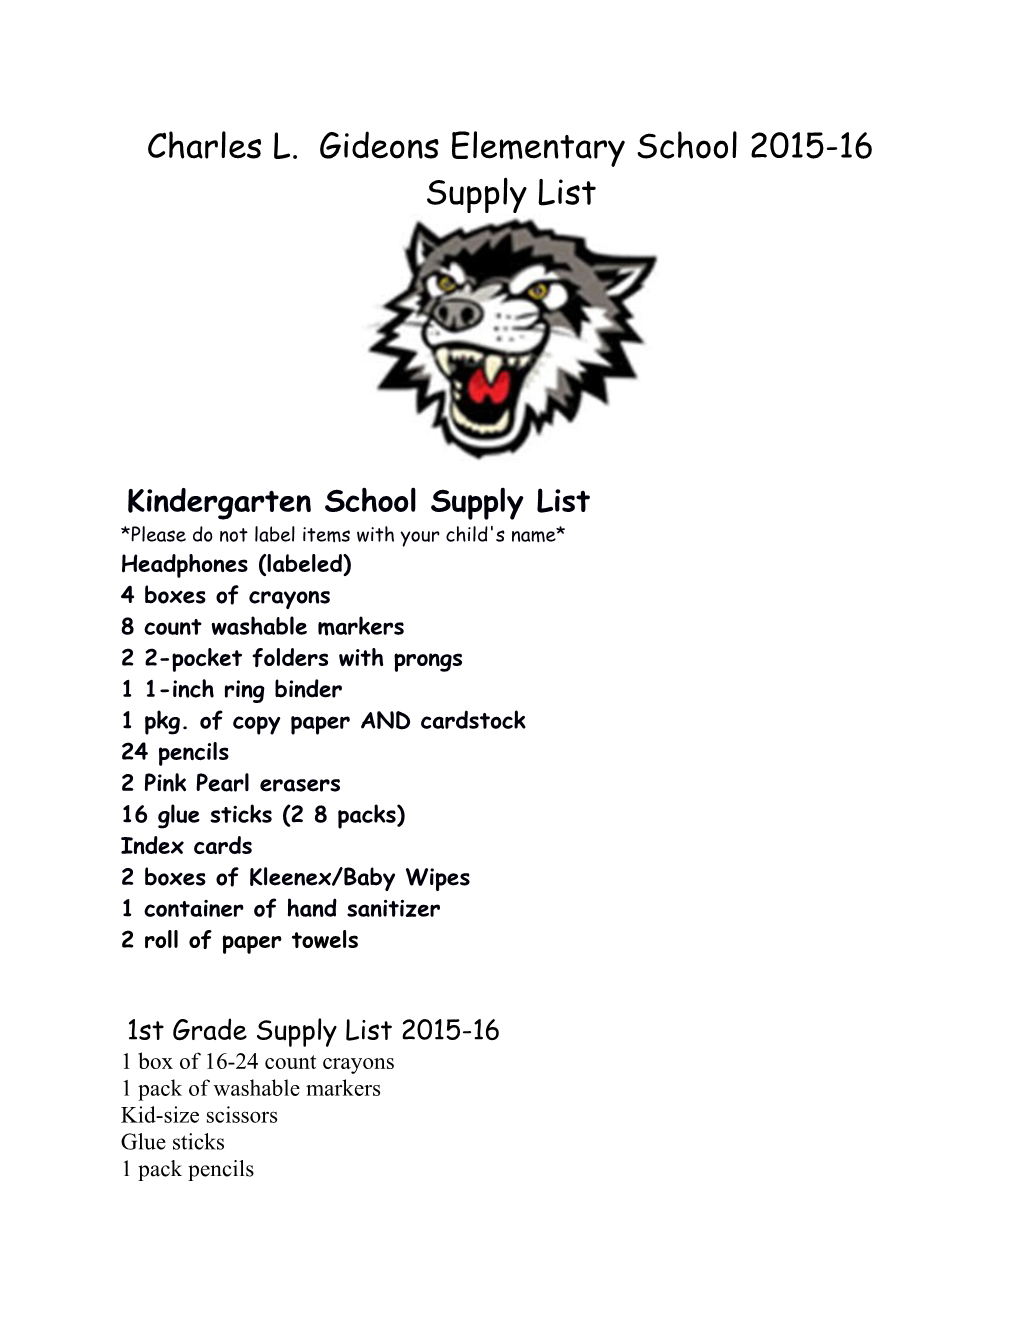 Charles L. Gideons Elementary School 2015-16 Supply List